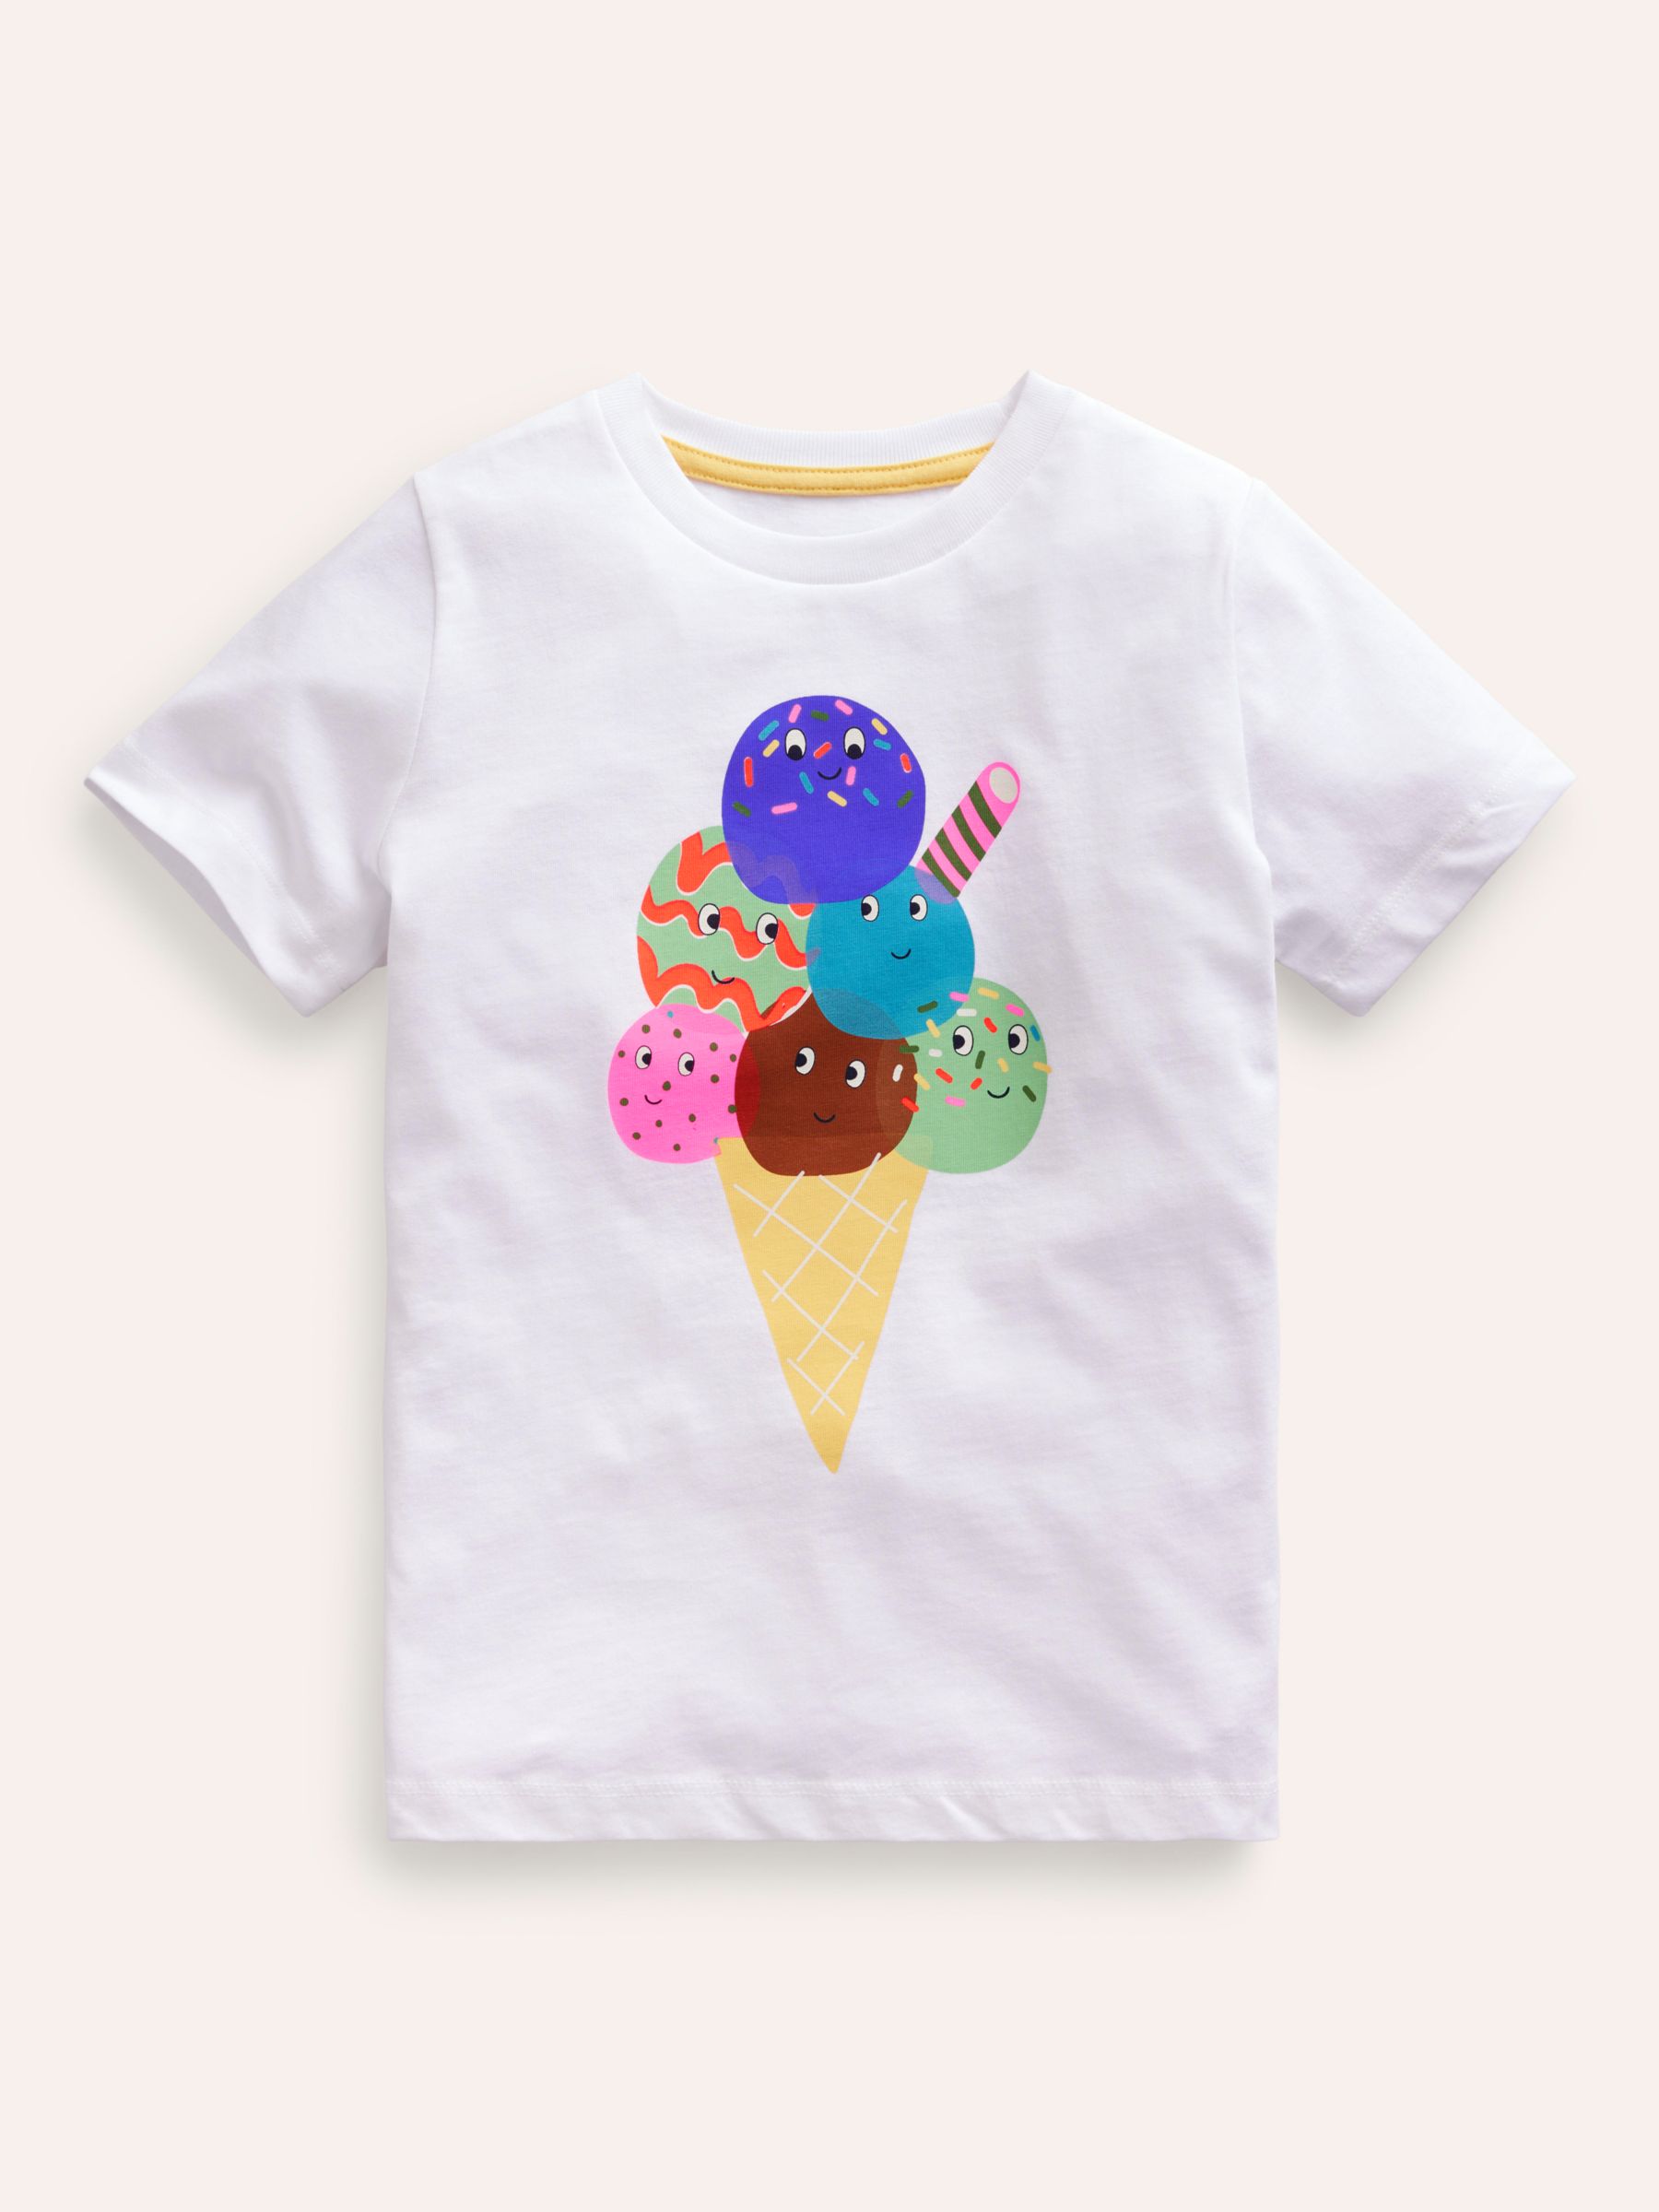 Mini Boden Kids' Ice Cream Print T-Shirt, White/Multi, 2-3Y